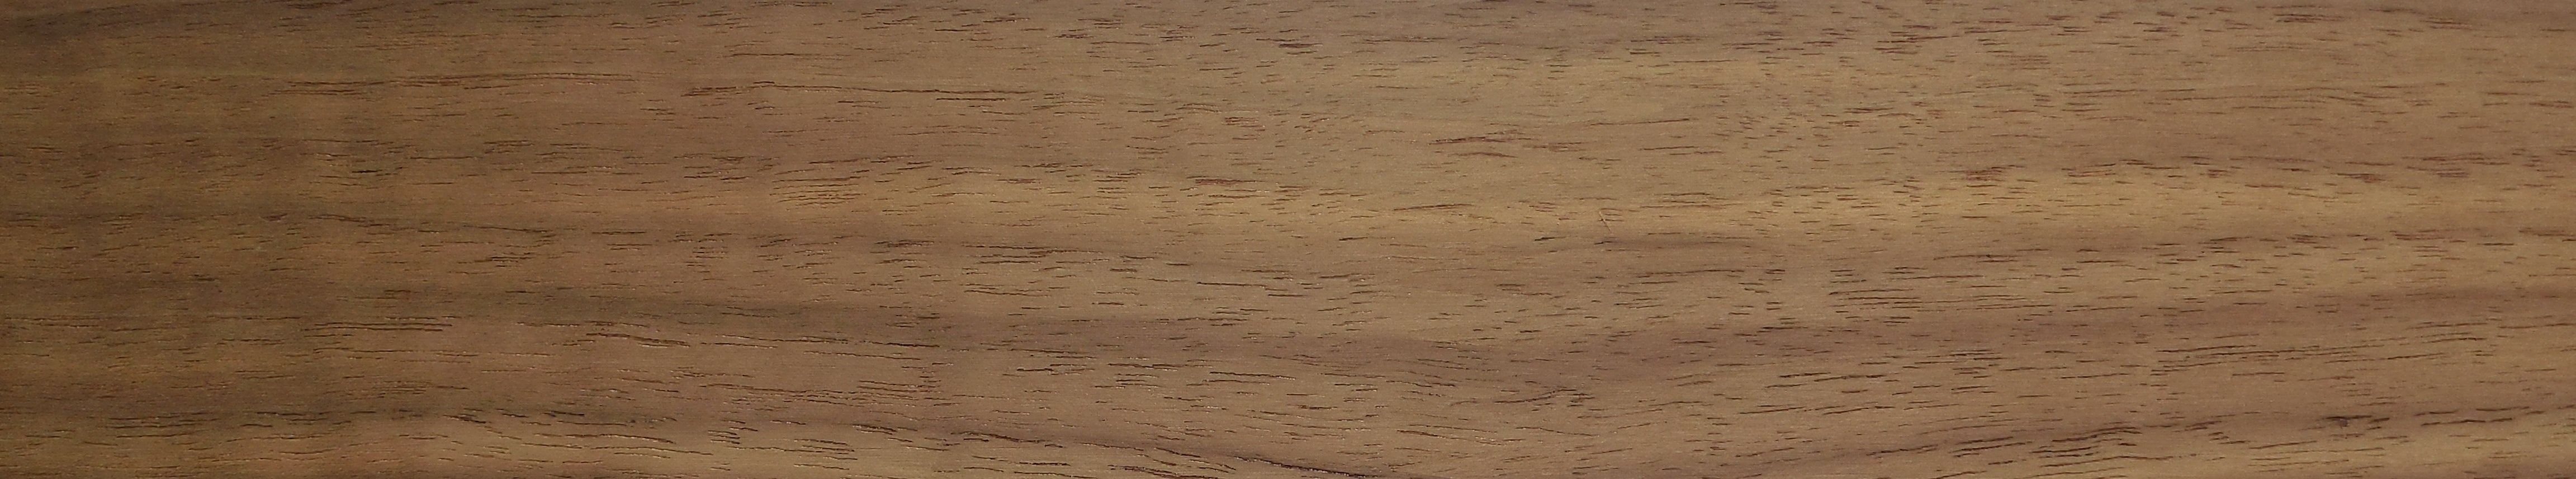 WALNUT AMERICAN BLACK WALNUT Pre-glued Iron On Real Wood Edging 65mm x 50 Metres